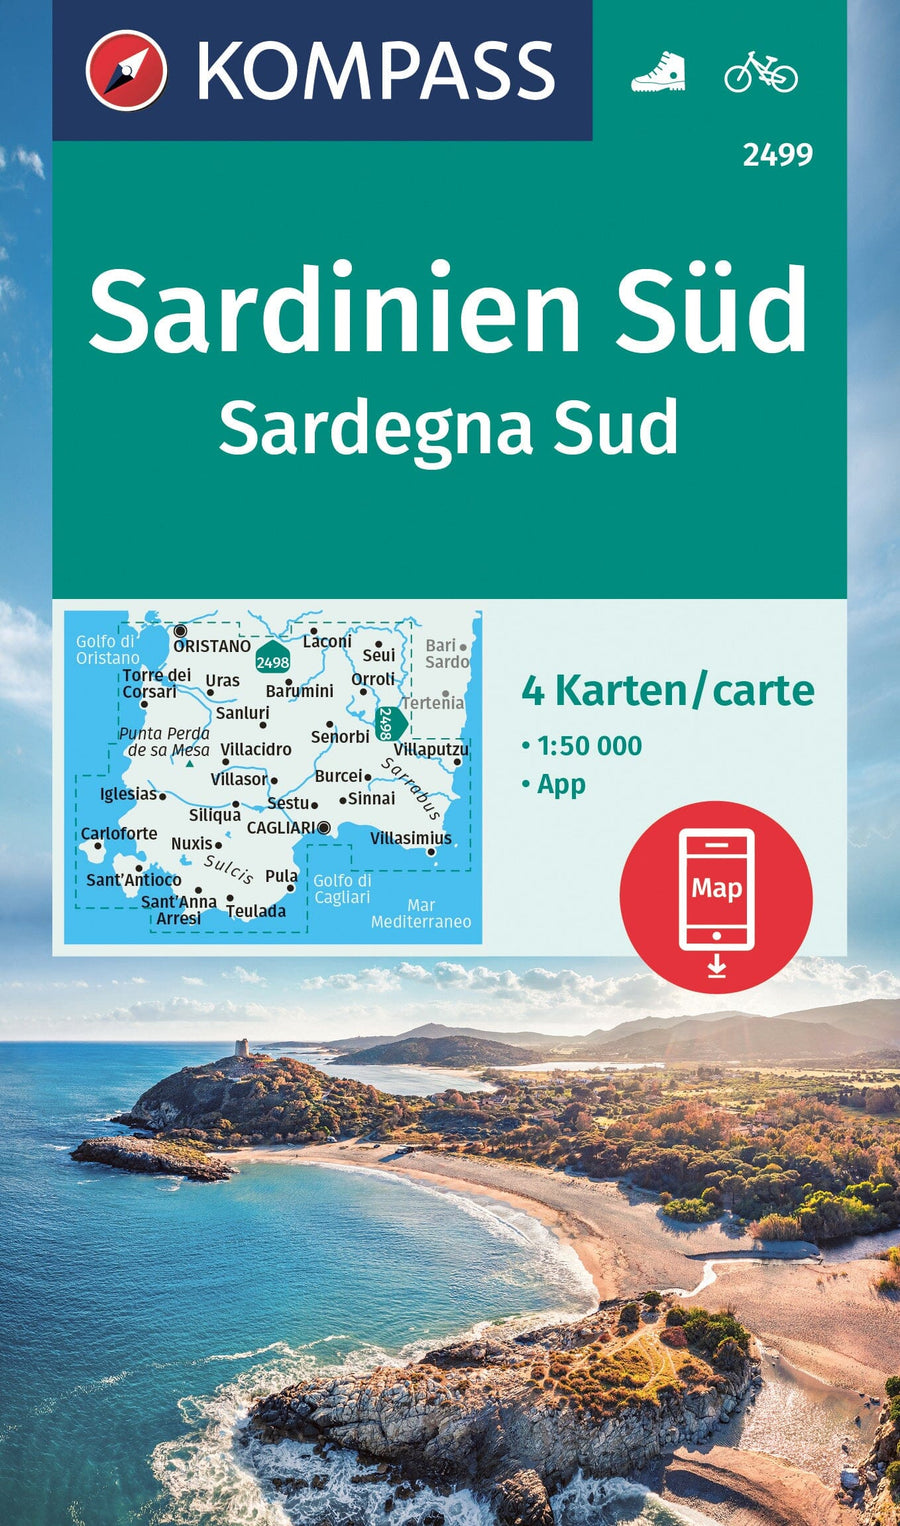 Carte de randonnée n° 2499 - Sardaigne Sud | Kompass carte pliée Kompass 